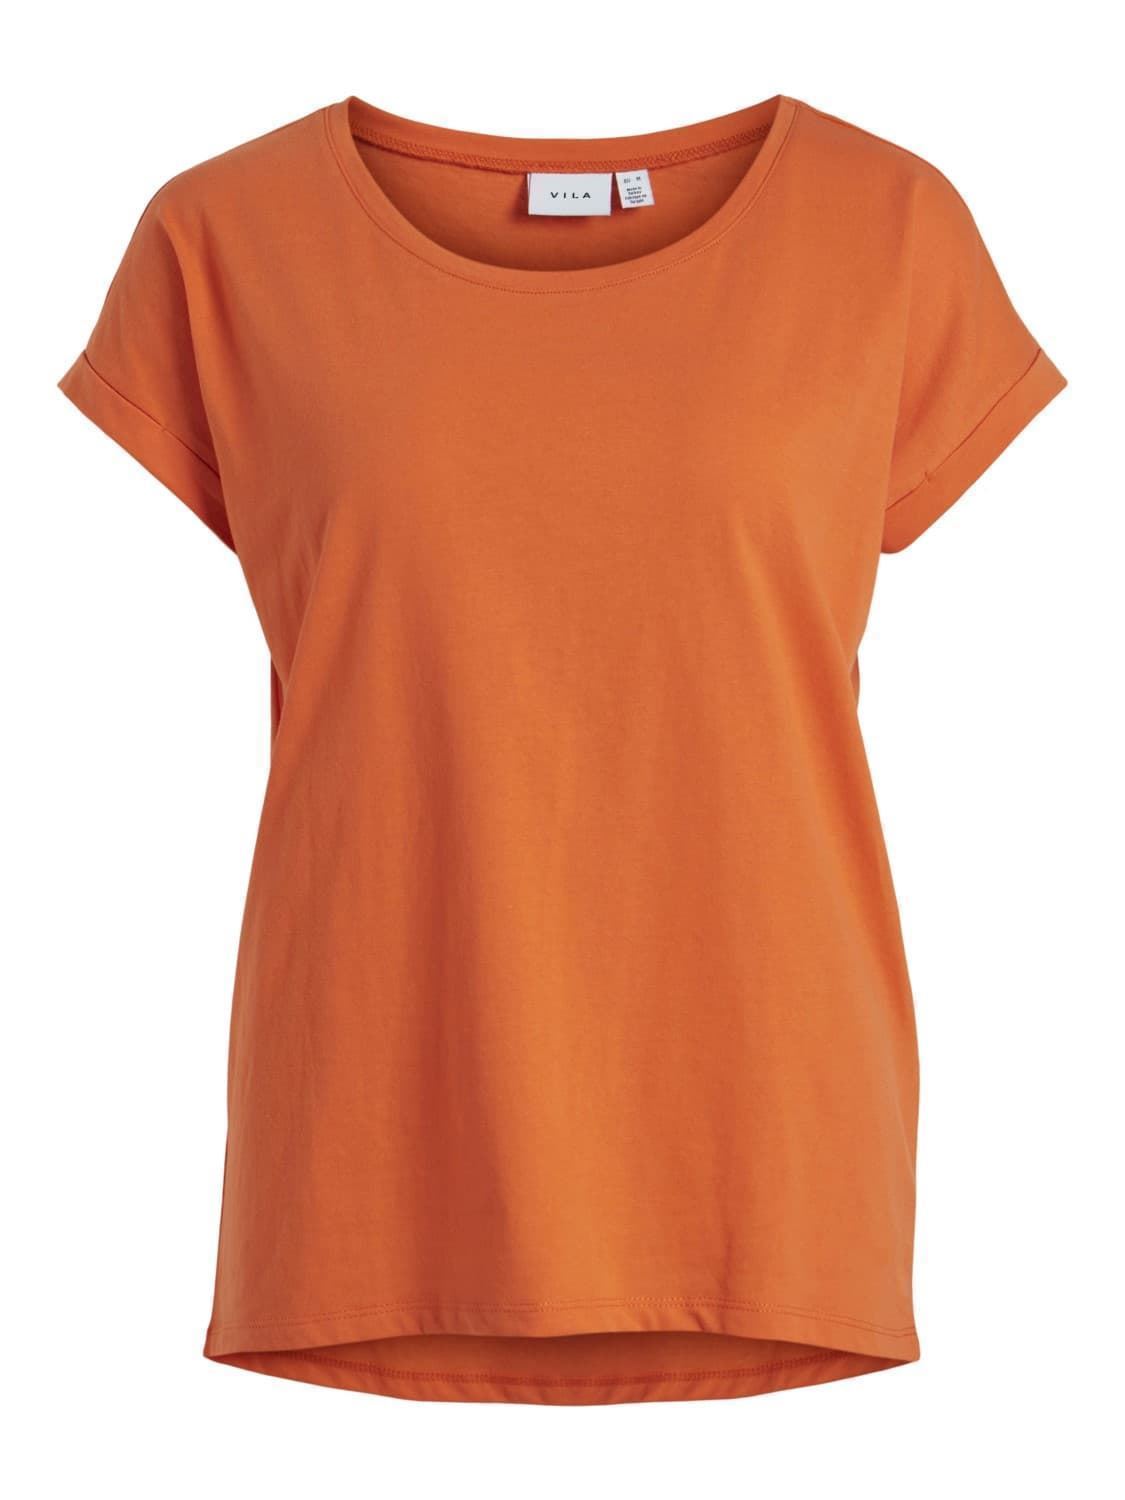 Camiseta vidreamers naranja - Imagen 4